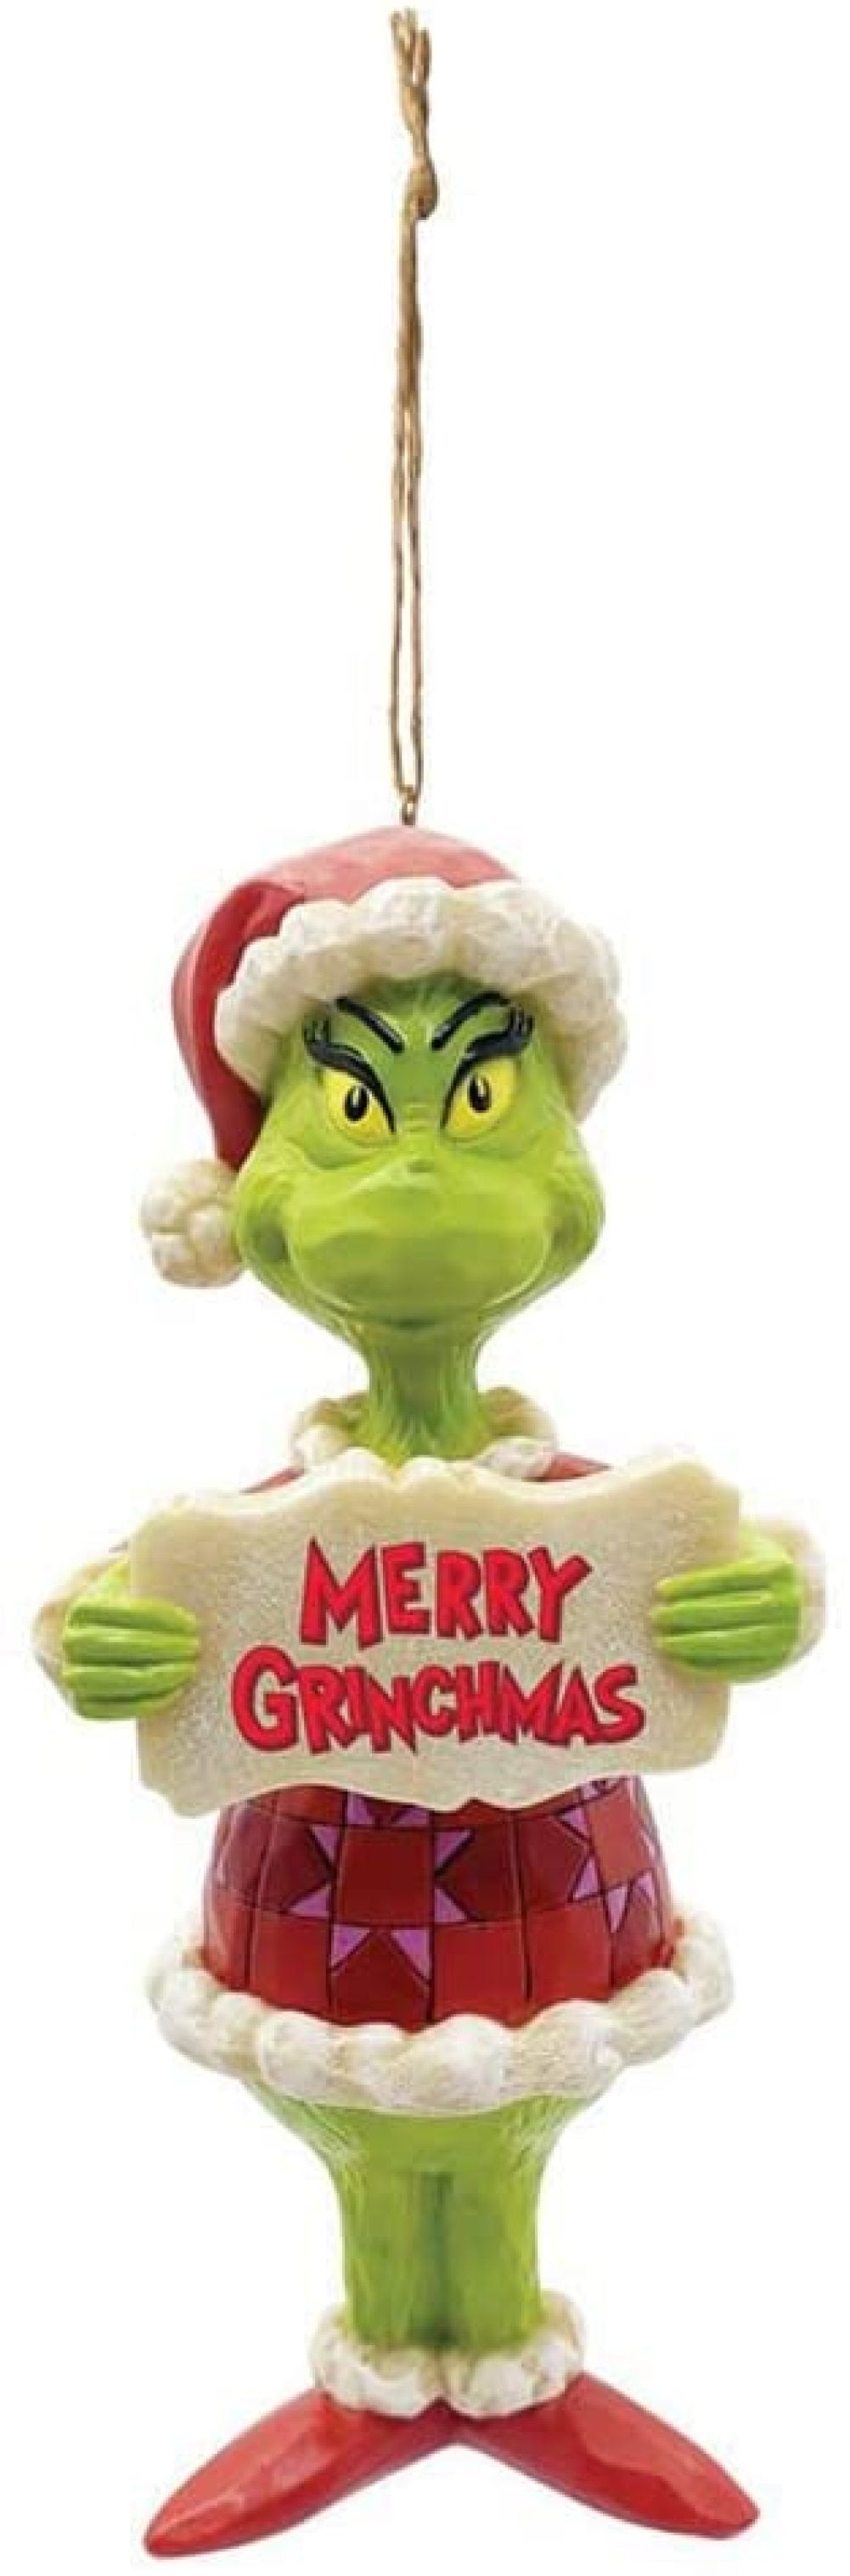 Enesco Dr. Seuss The Grinch Merry Grinchmas PVC Ornament